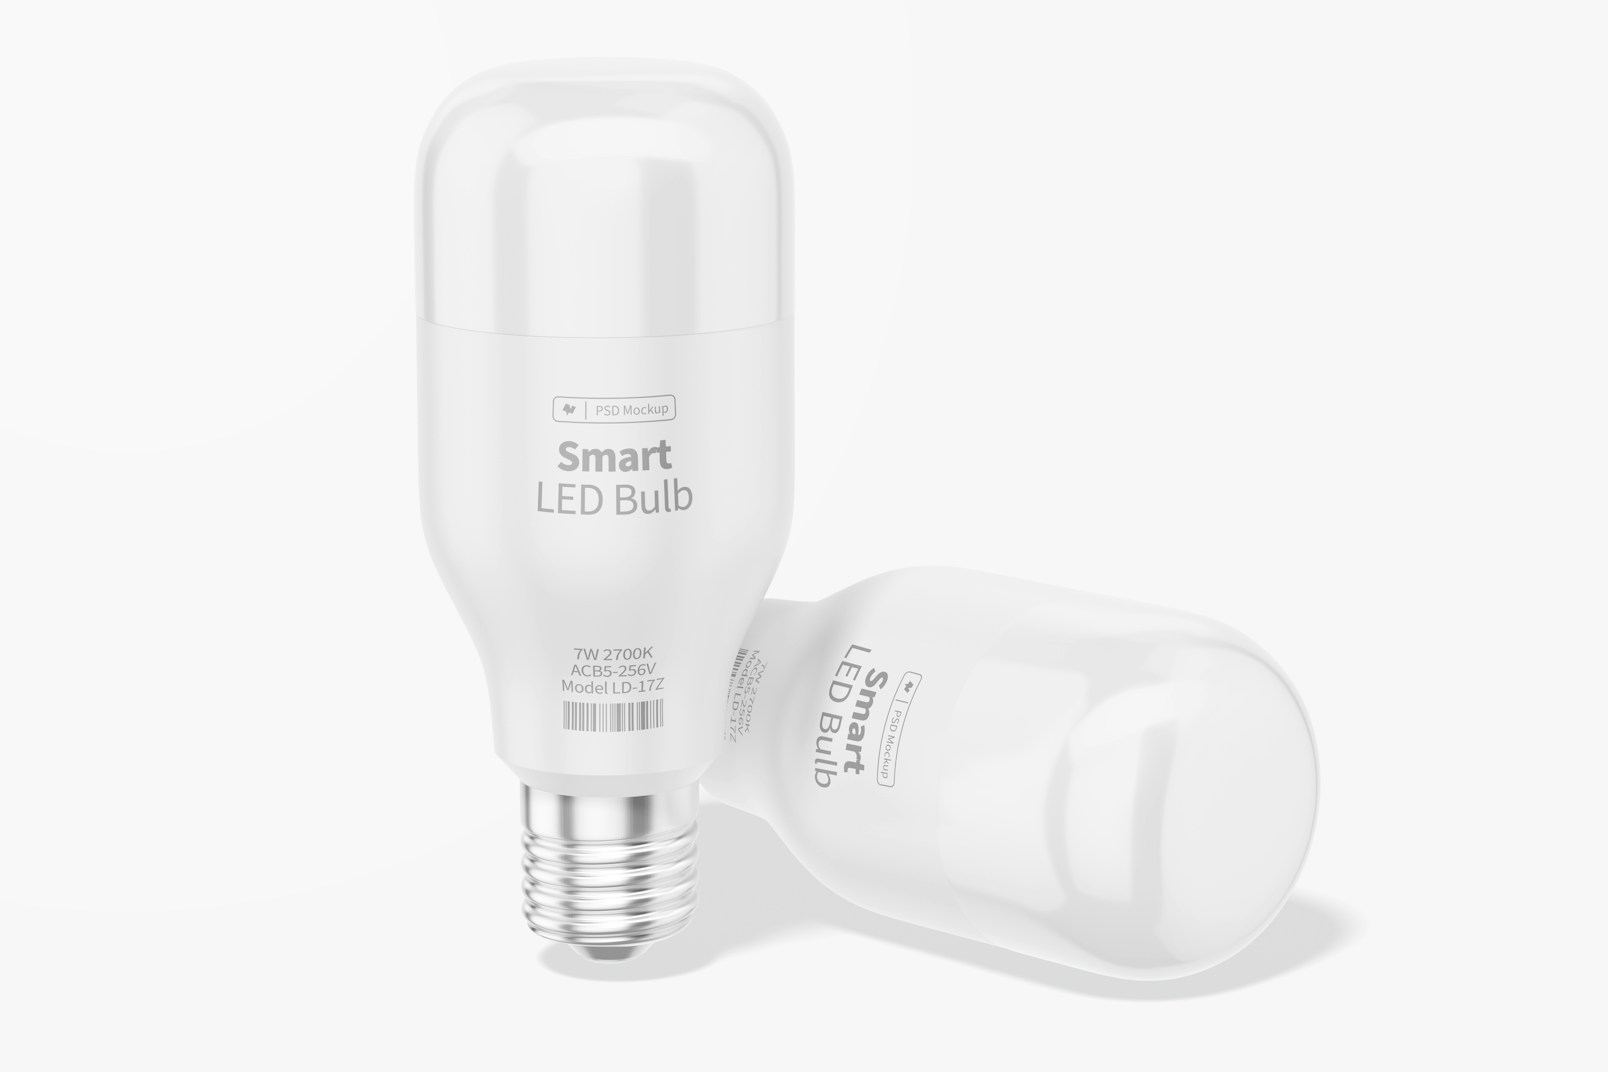 Smart LED Bulbs Mockup, Standing and Dropped